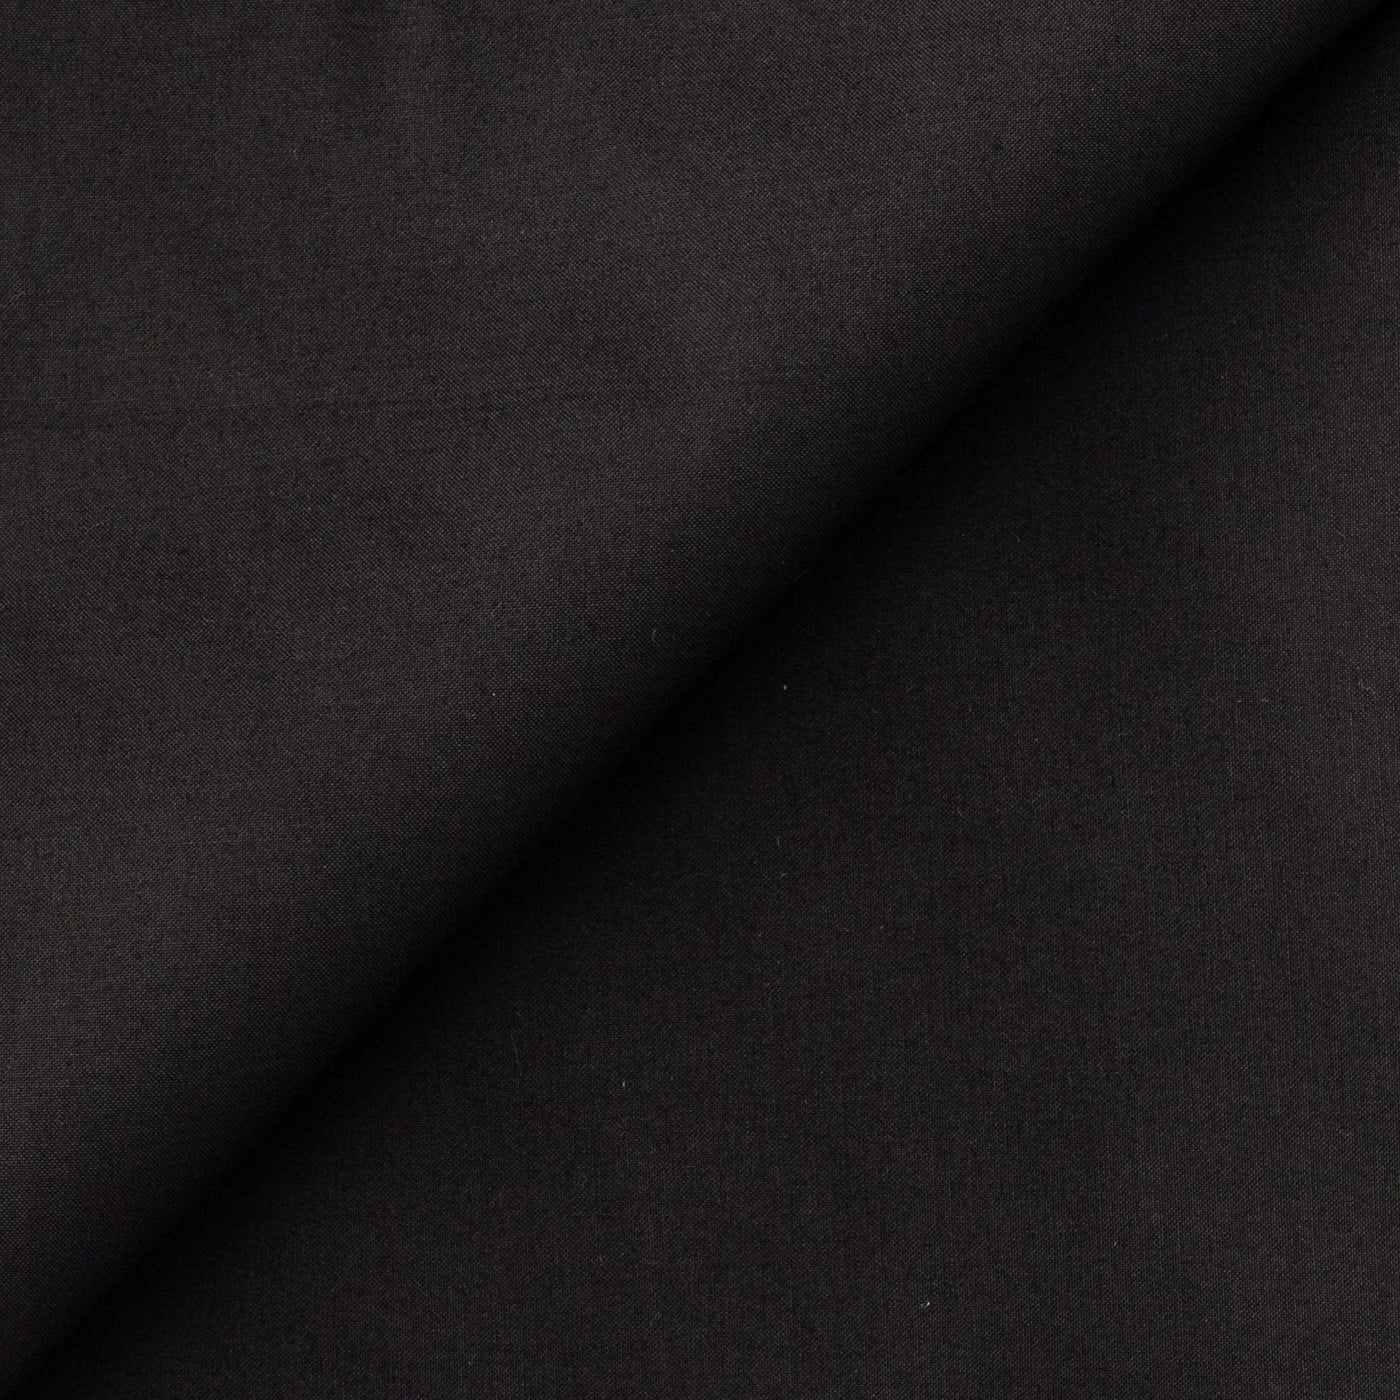 Fabric Pandit Cut Piece 0.75M (CUT PIECE) Black Cotton Poplin Men's Shirt Fabric (Width 58 inch)